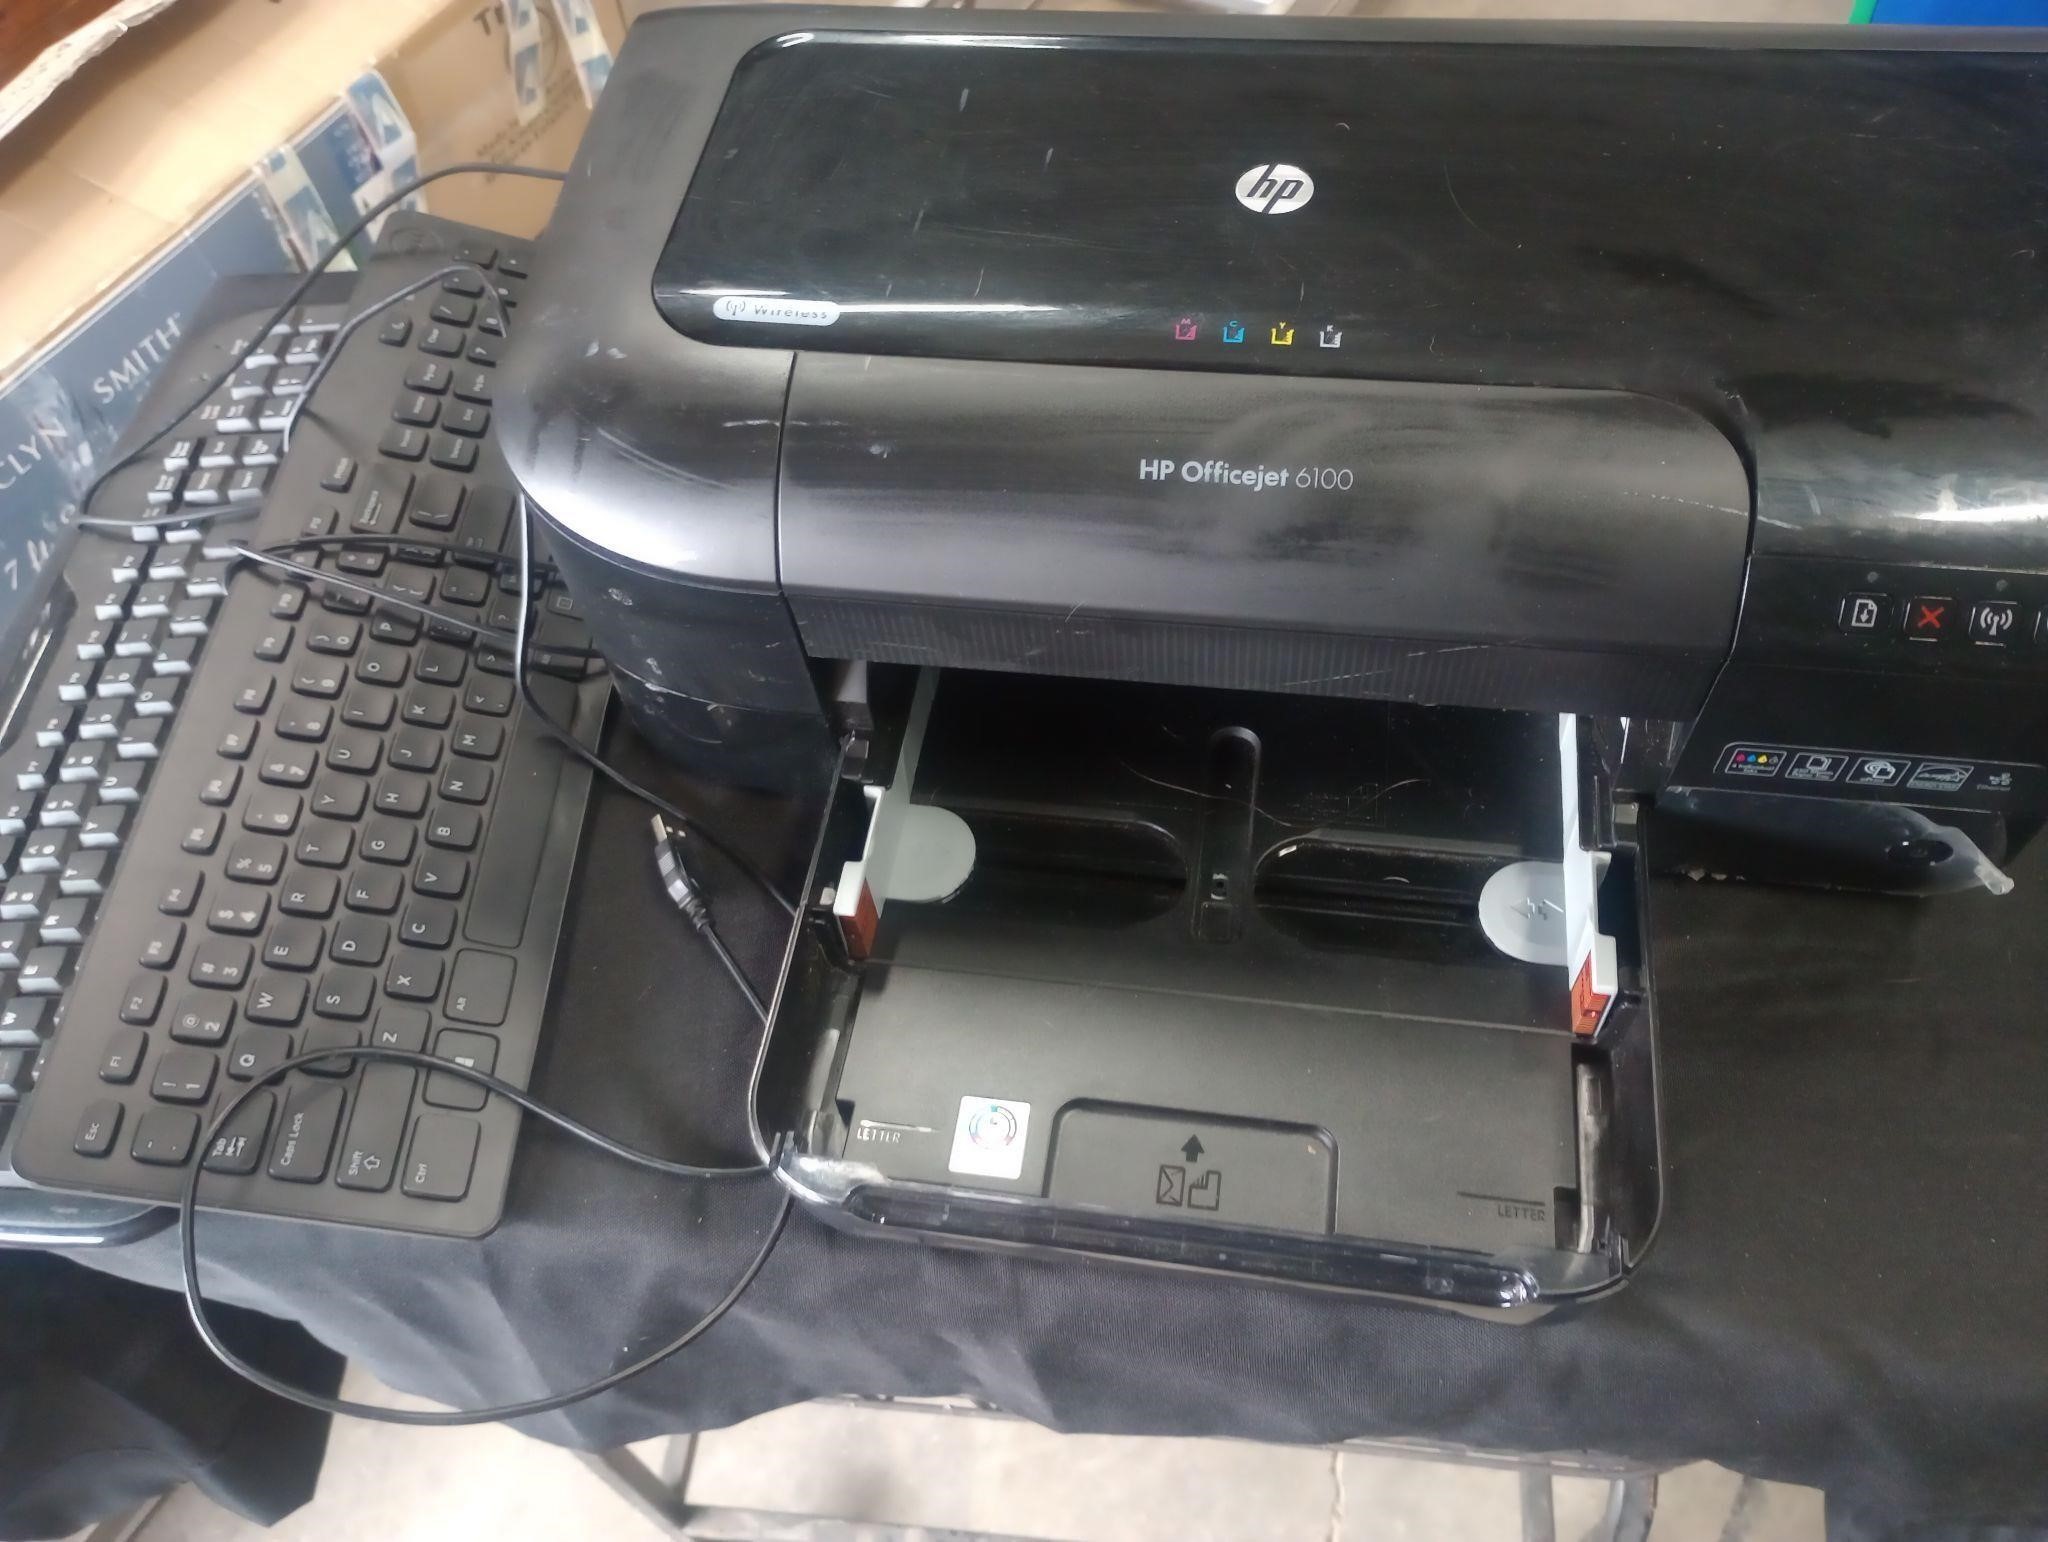 HP officejet printer/keyboards